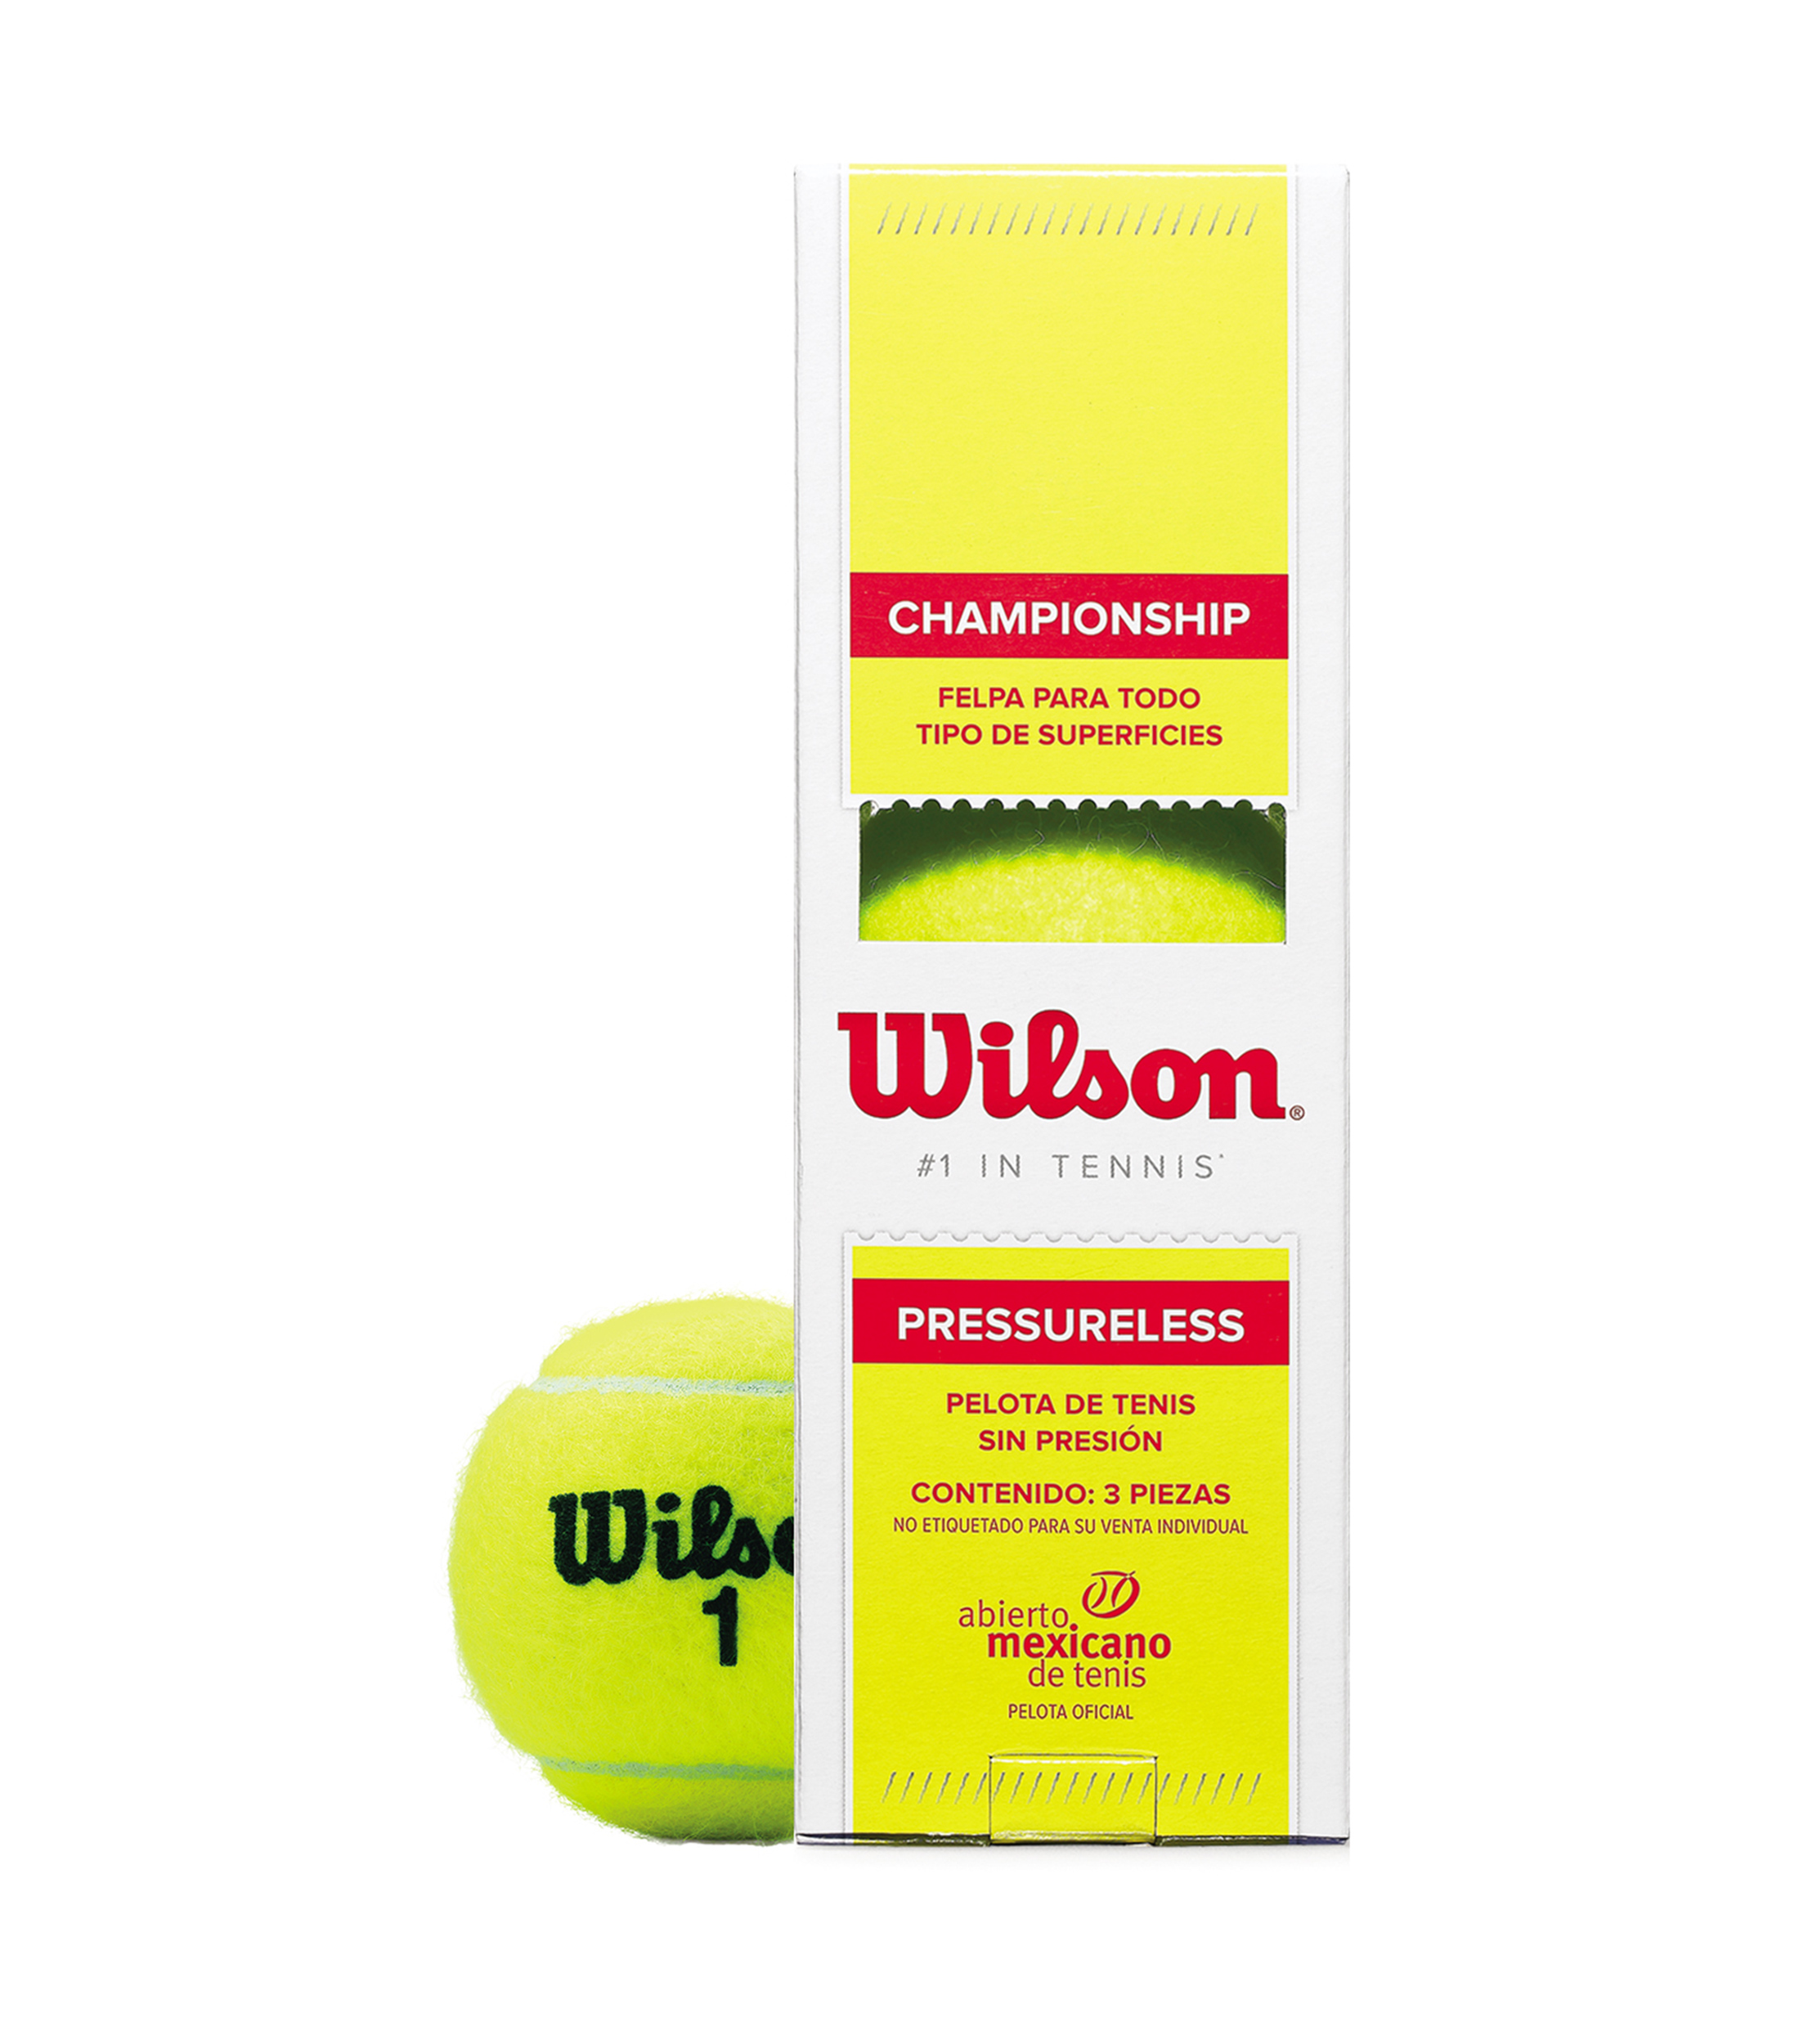 Vestido Wilson Training Tenis Padel Mujer En Palermo Tenis